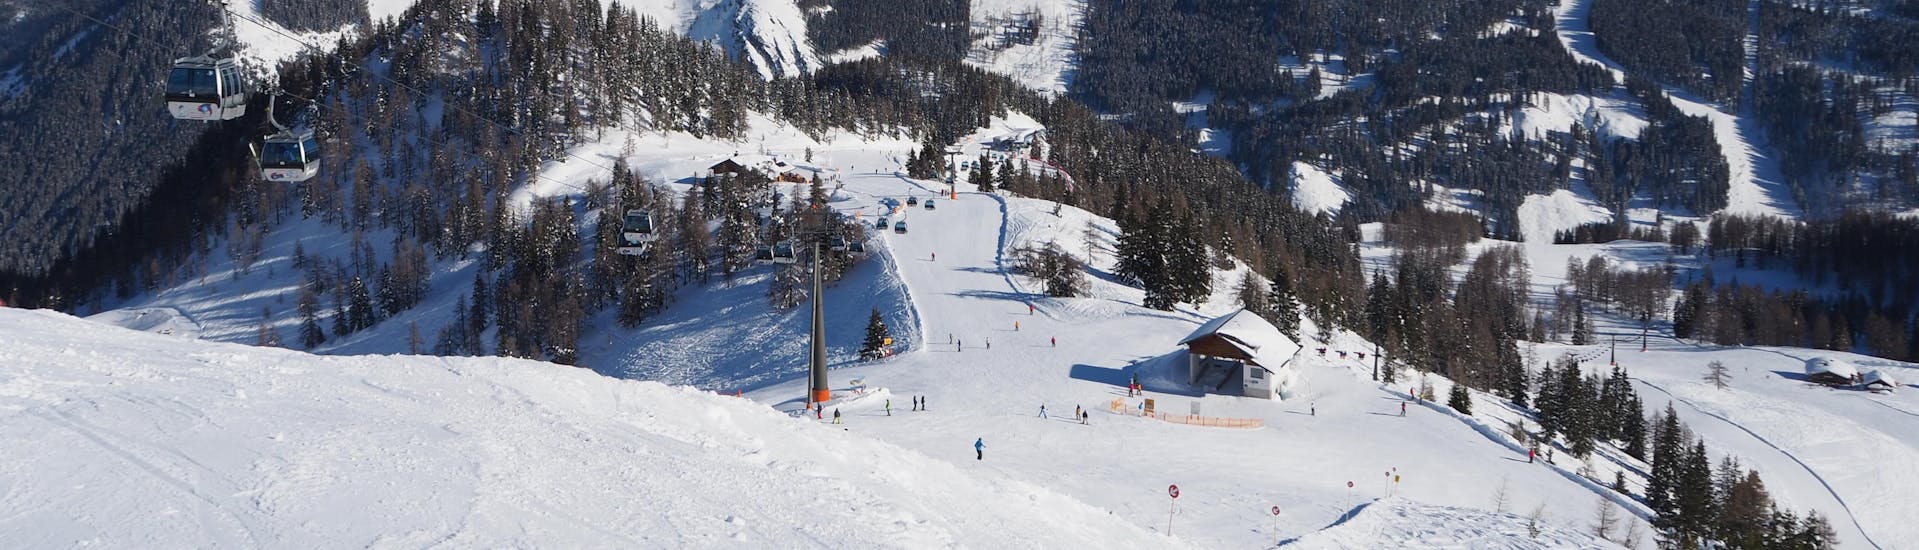 Adults and kids skiing in Radstadt ski resort.